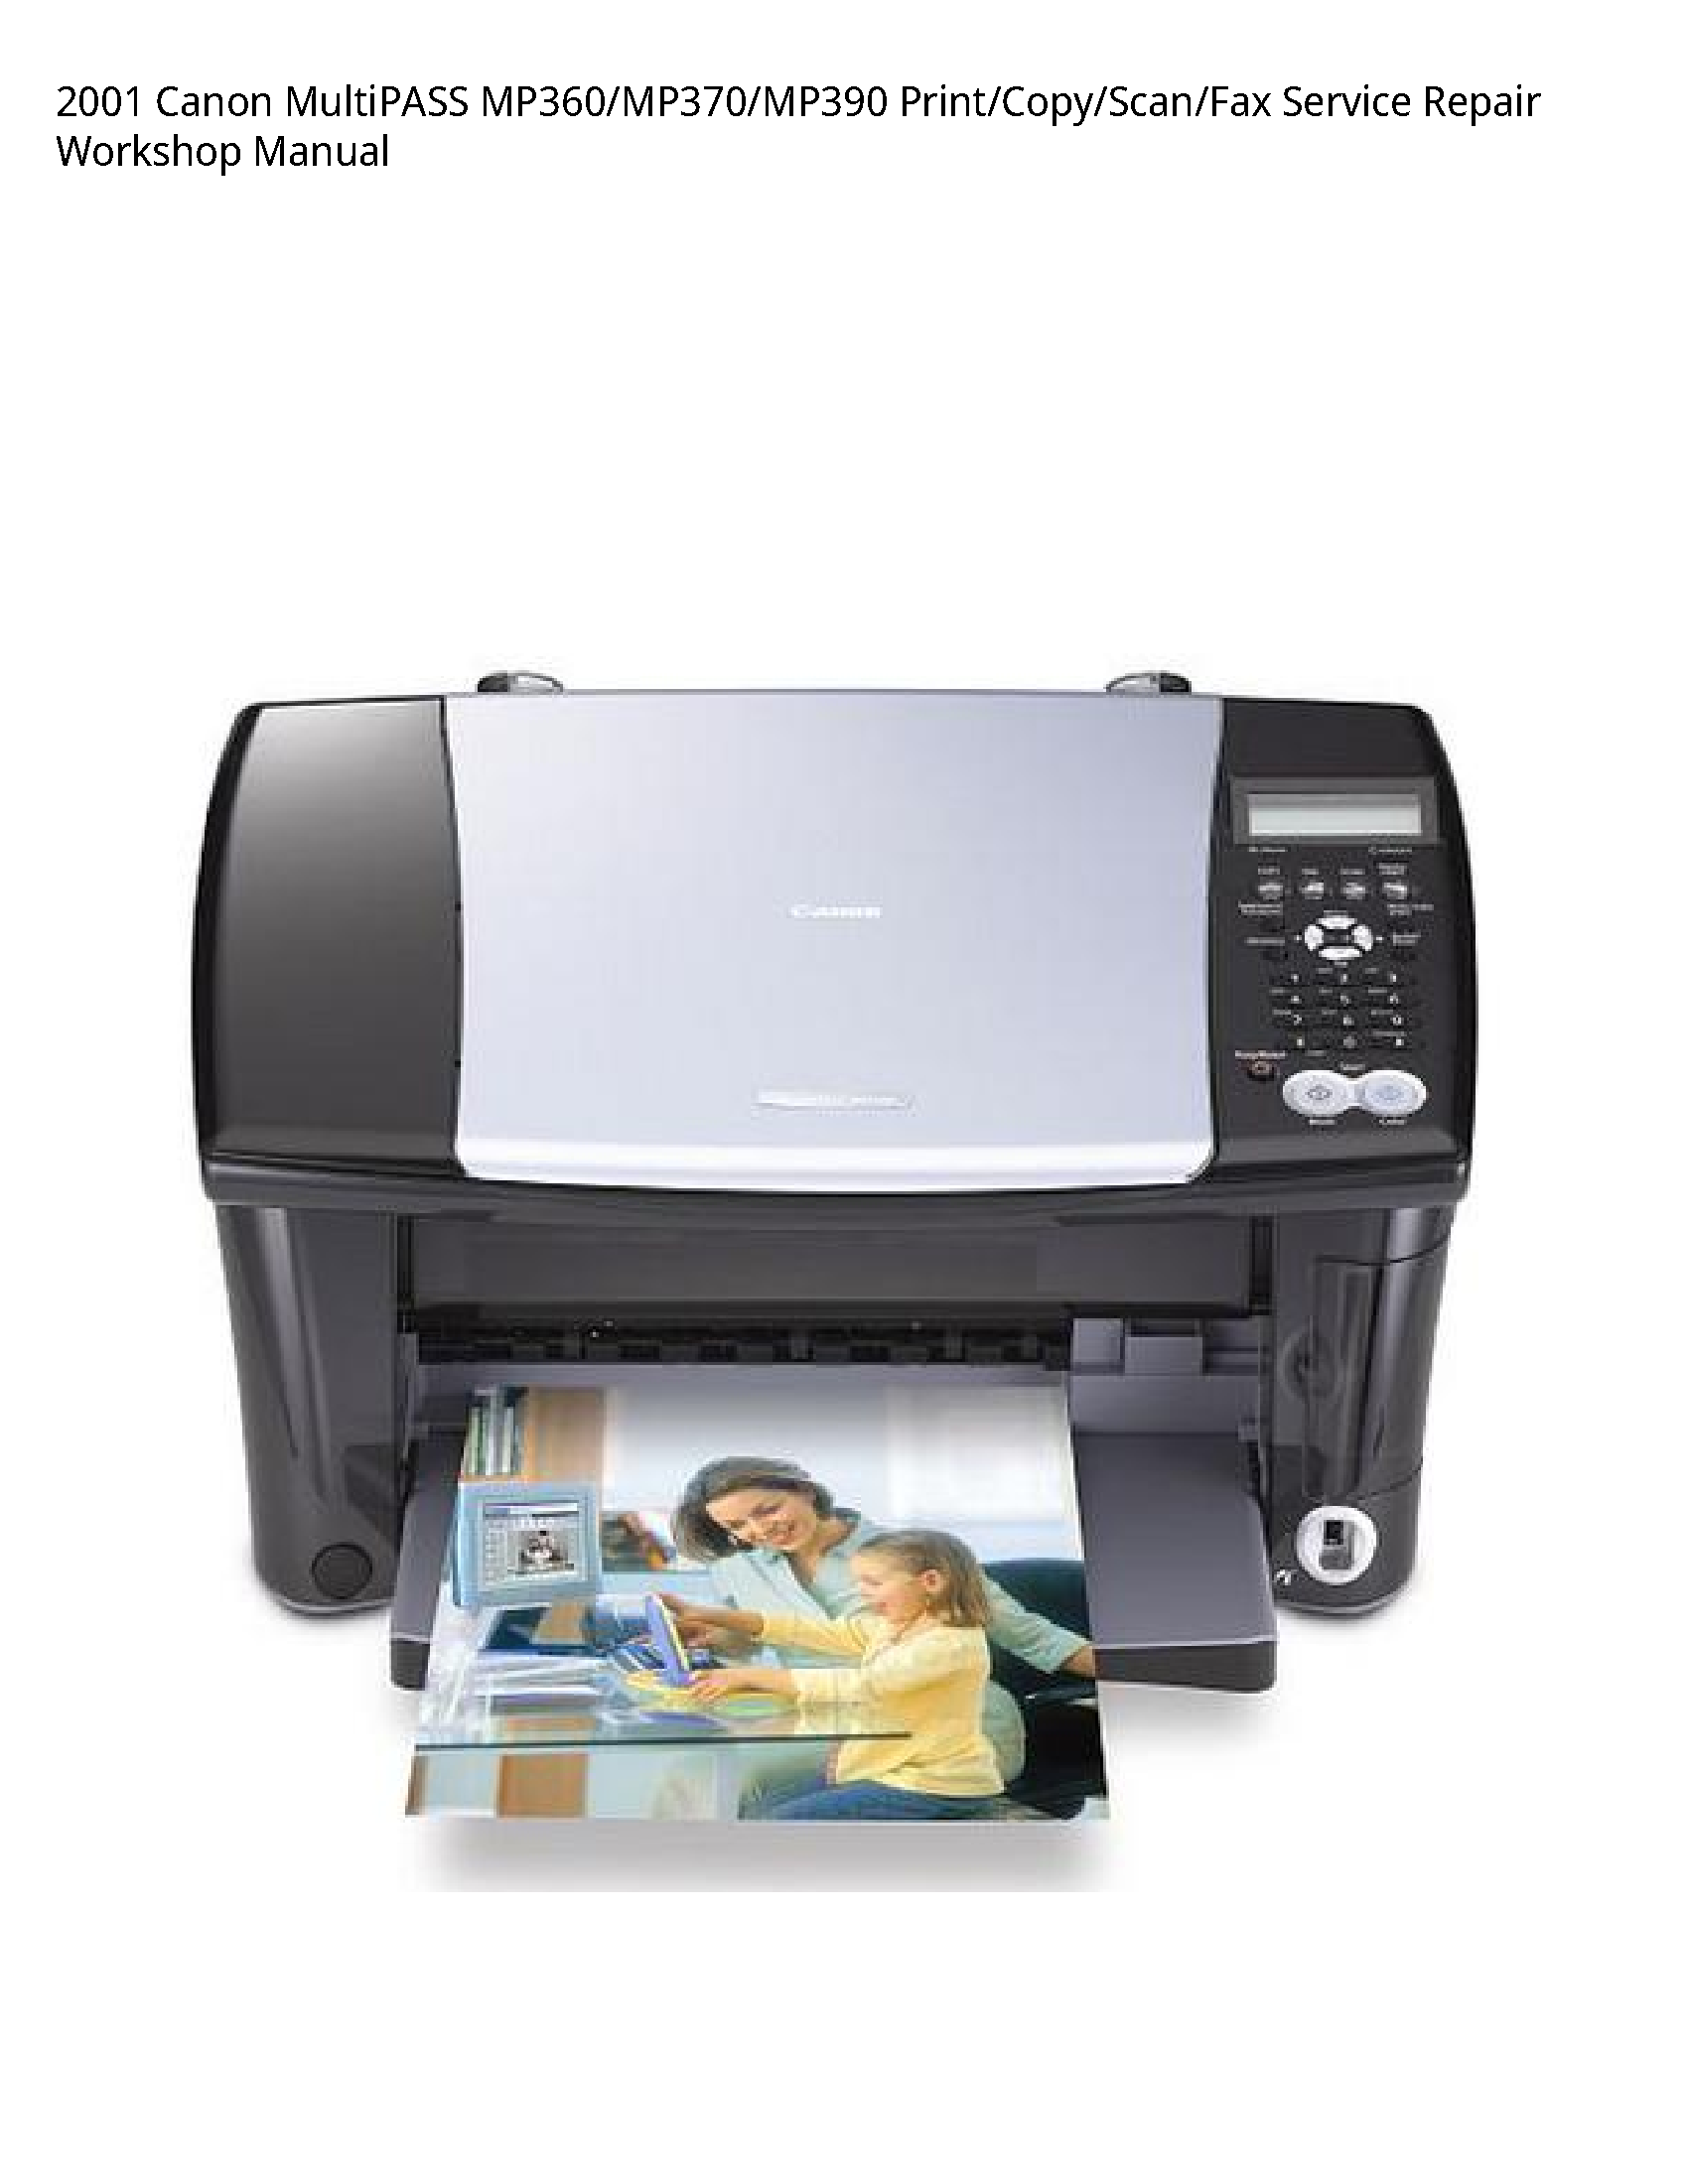 Canon MP360 MultiPASS Print/Copy/Scan/Fax manual